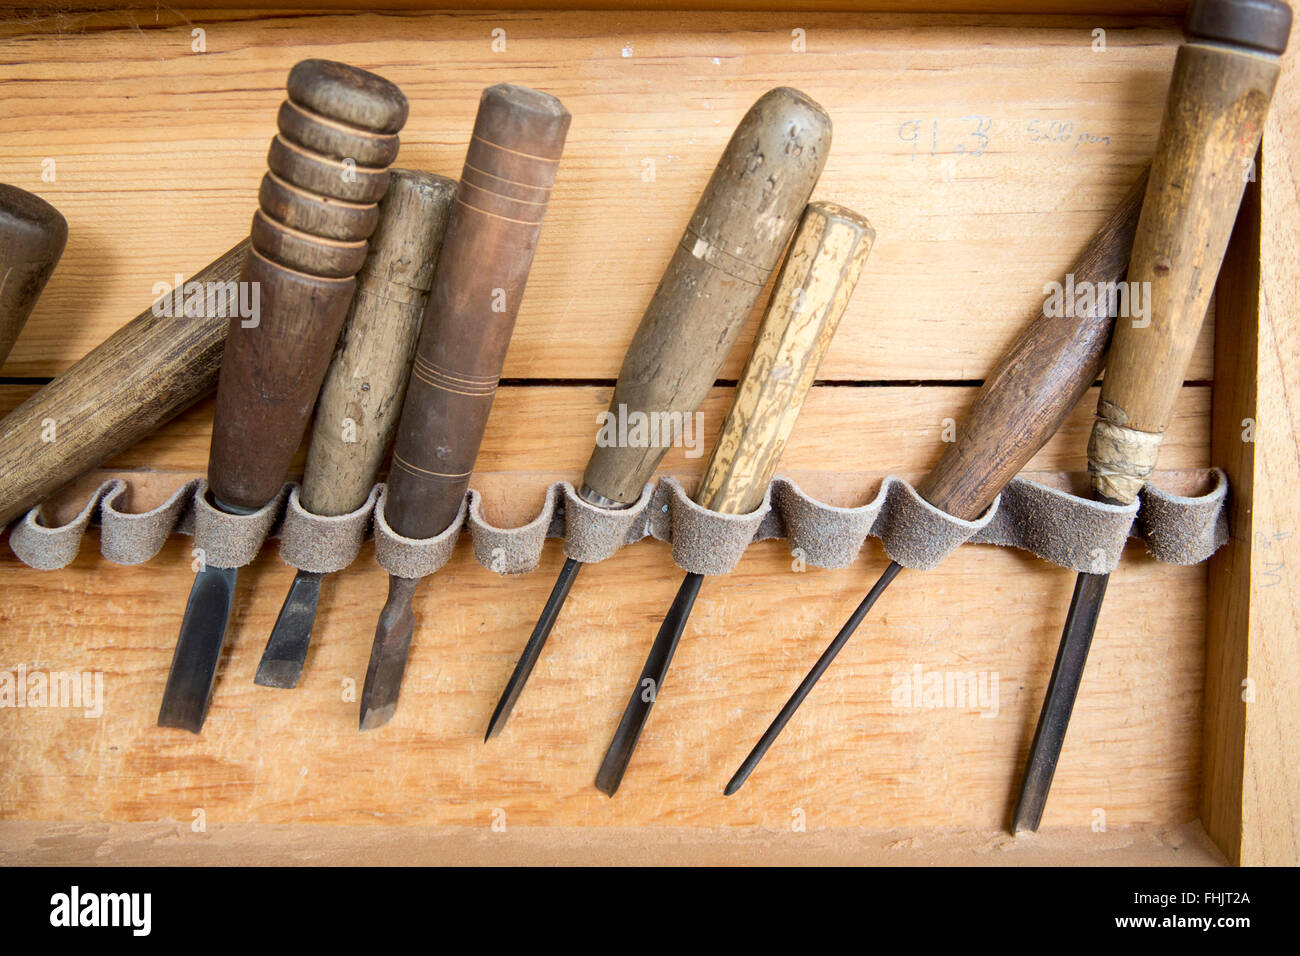 Santa Ana Zegache, Oaxaca, Mexico - Tools at a wood carving cooperative. Stock Photo